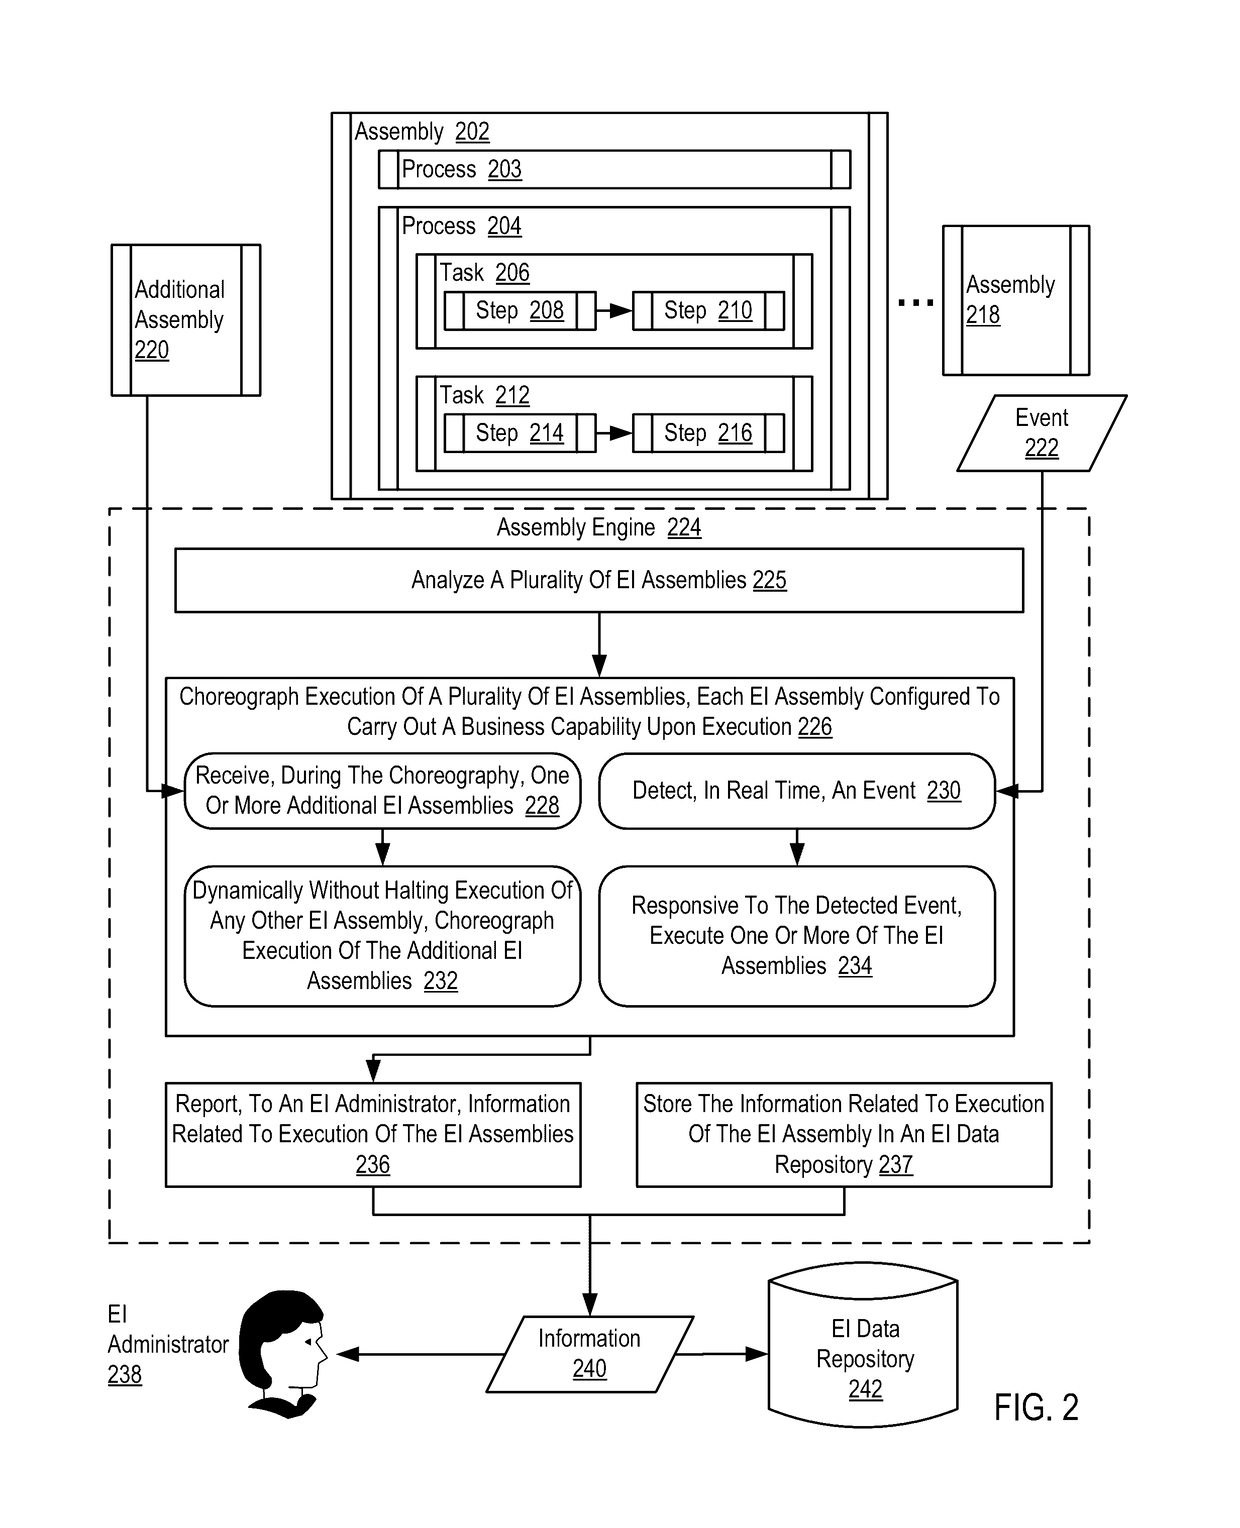 Decomposing a process model in an enterprise intelligence (‘EI’) framework